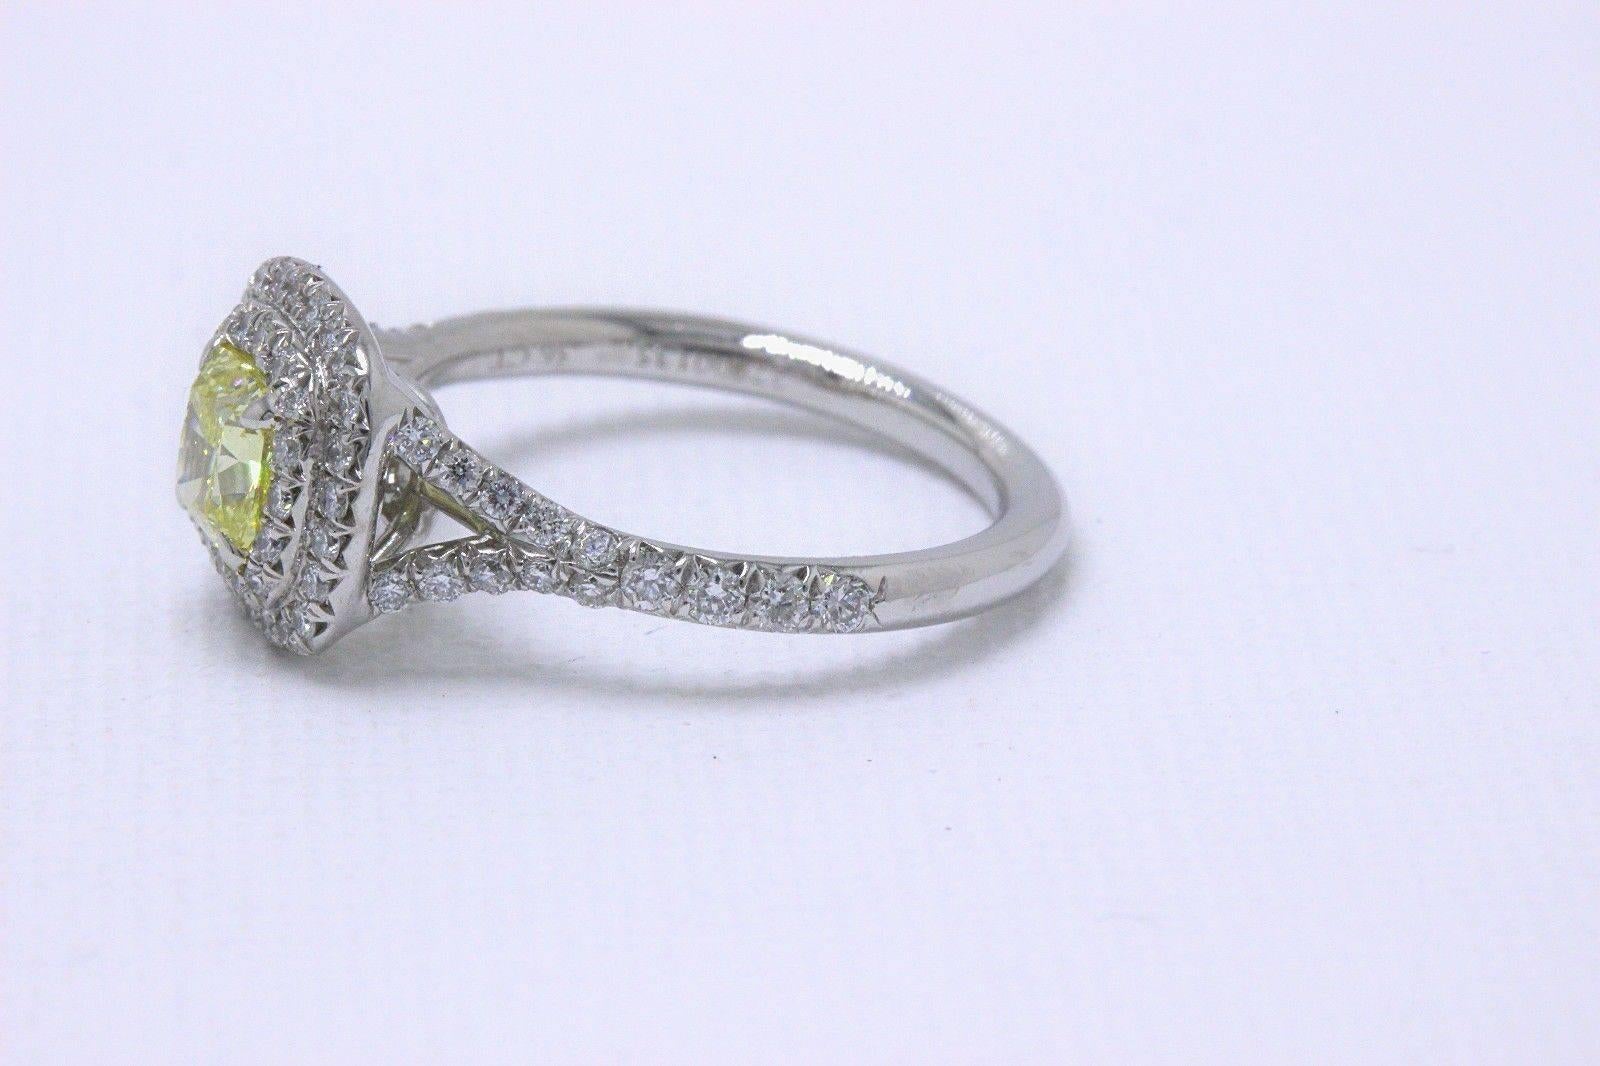 Cushion Cut Tiffany & Co. Soleste Fancy Intense Yellow 0.97 Carat Diamond Engagement Ring